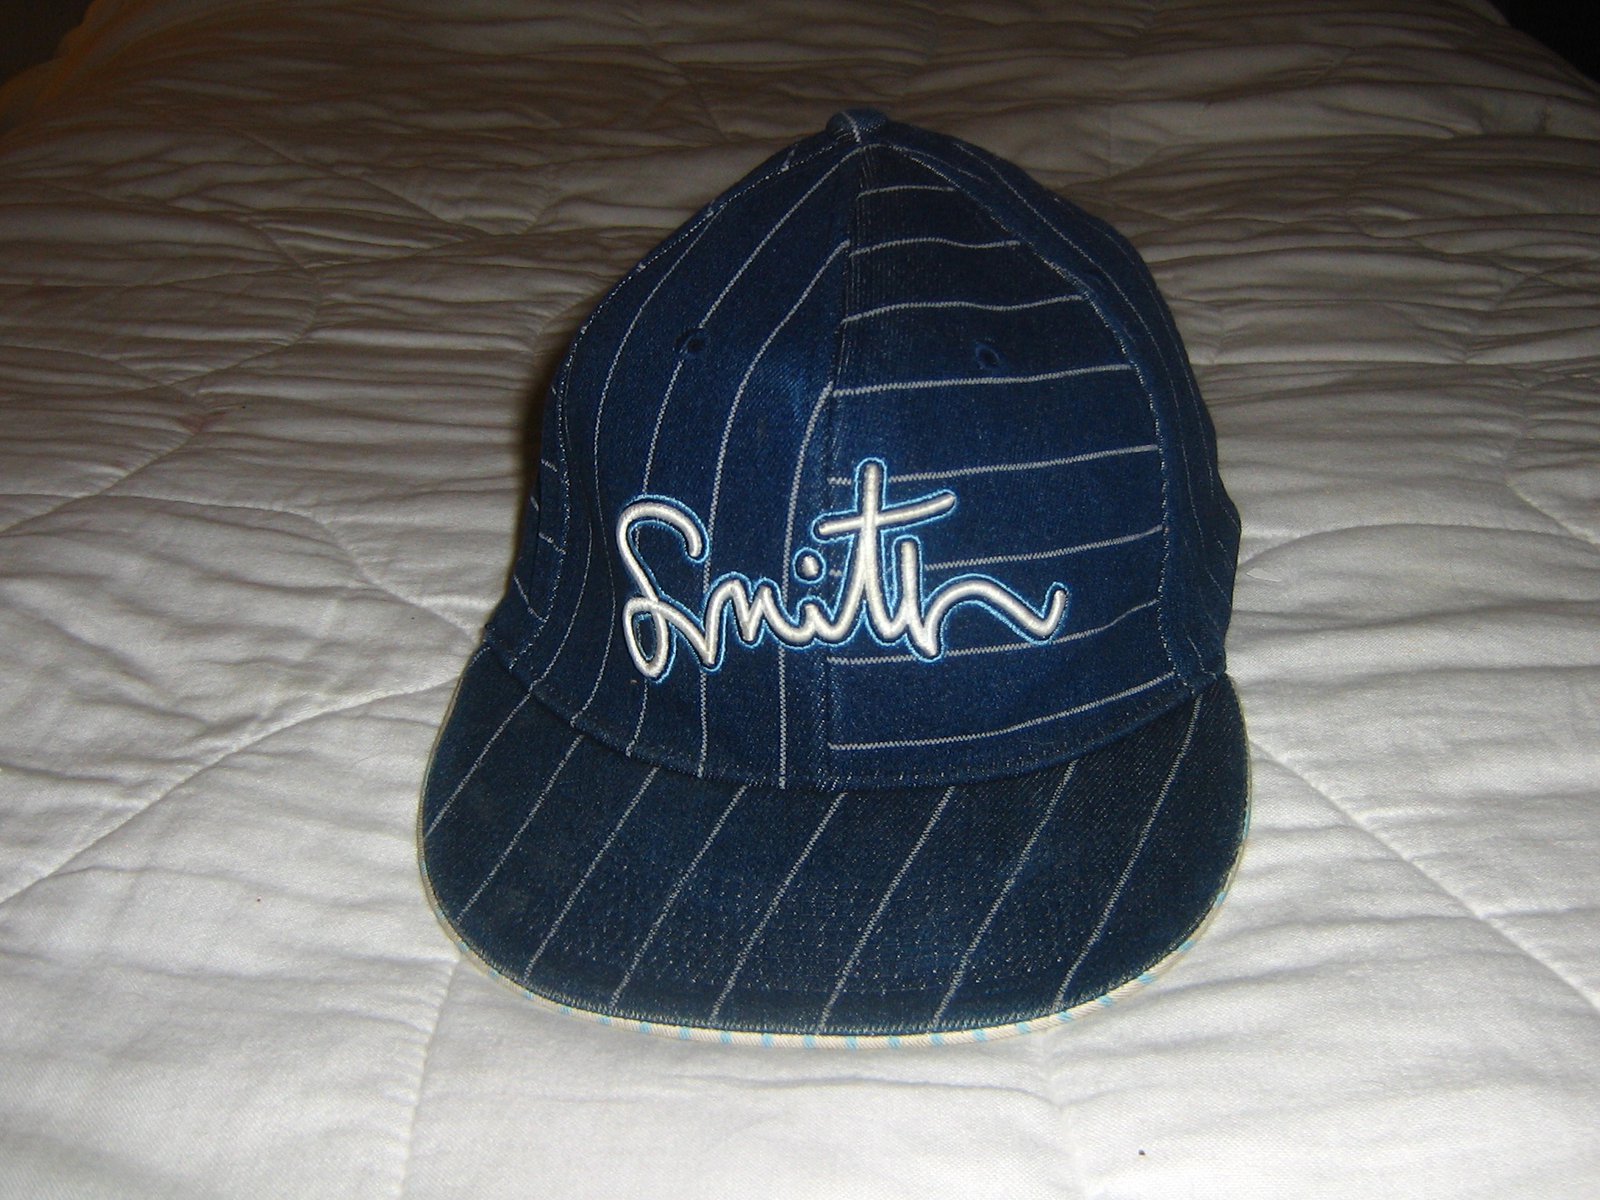 Smith hat.